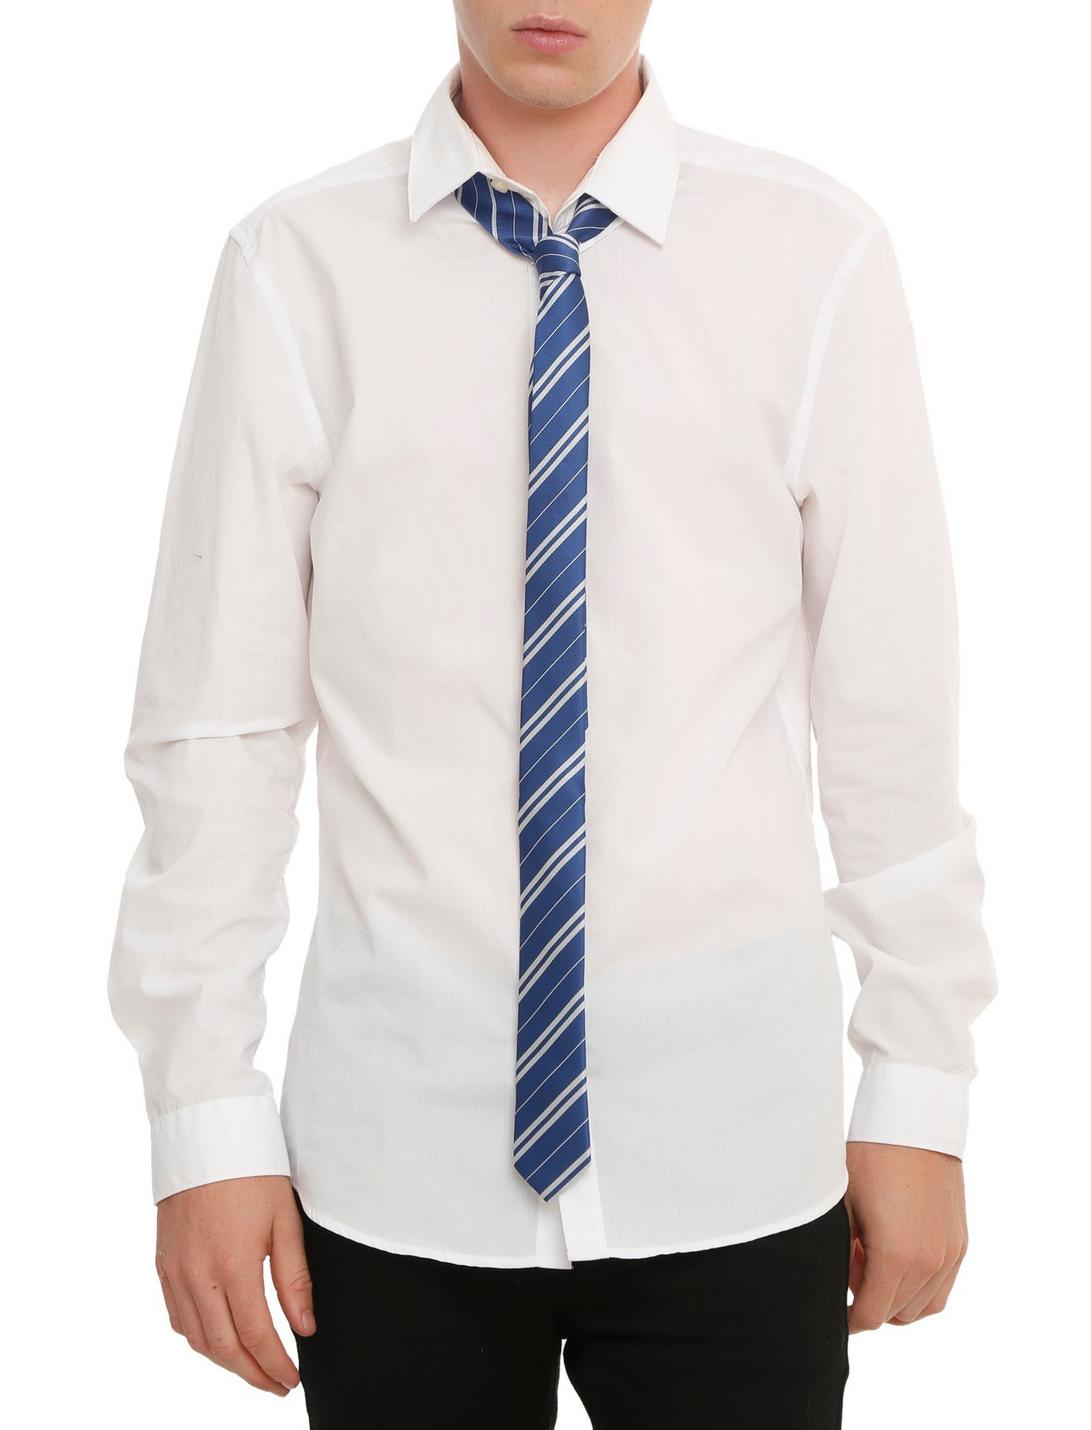 Navy & Grey Striped Skinny Tie, , hi-res